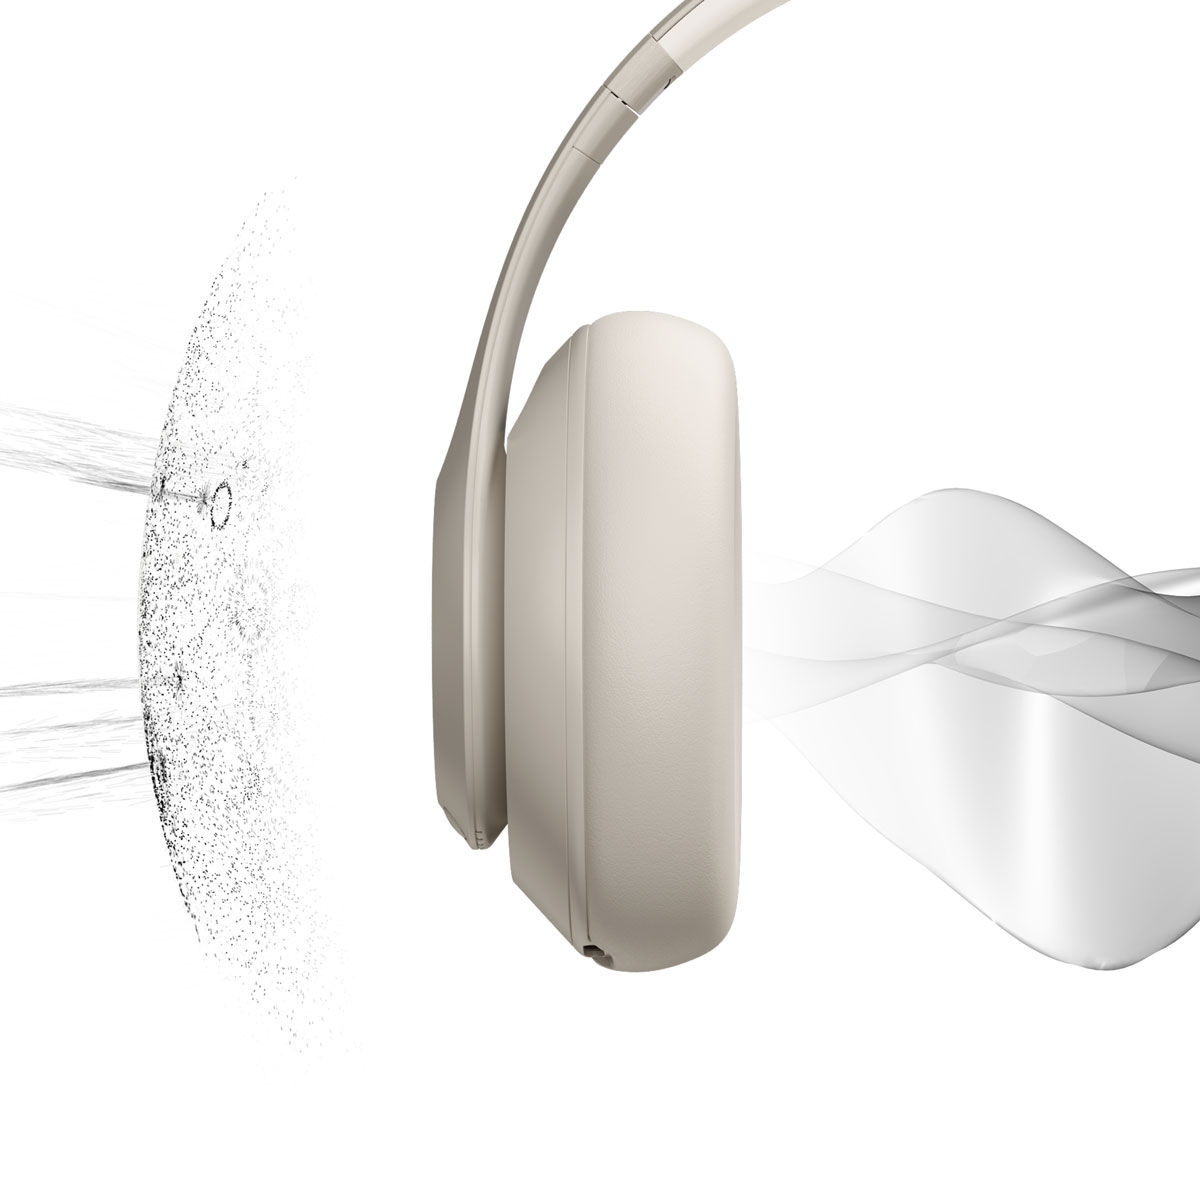 Beats Studio Pro Wireless Noise Cancelling Over-the-Ear Headphones